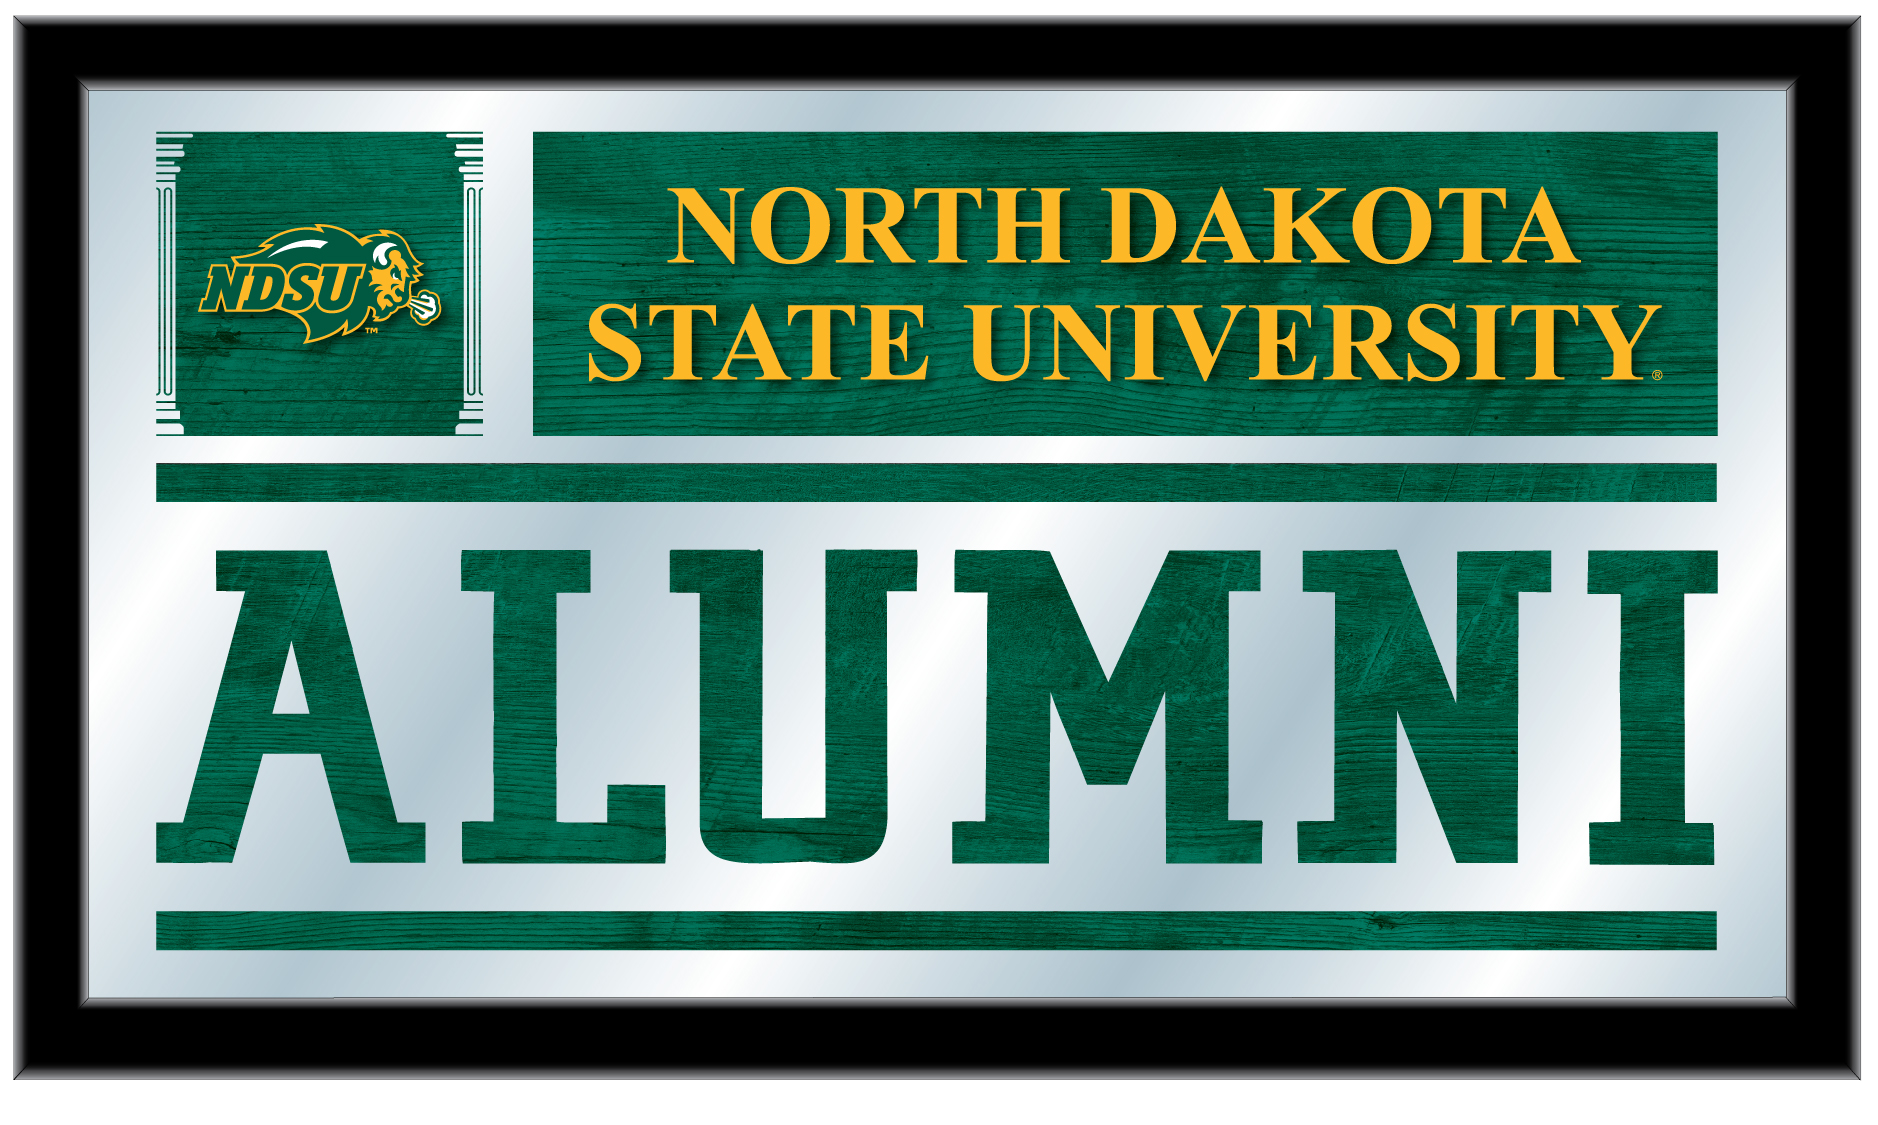 North Dakota State University Alumni Mirror front view highlighting the NDSU Bison logo and Alumni text.